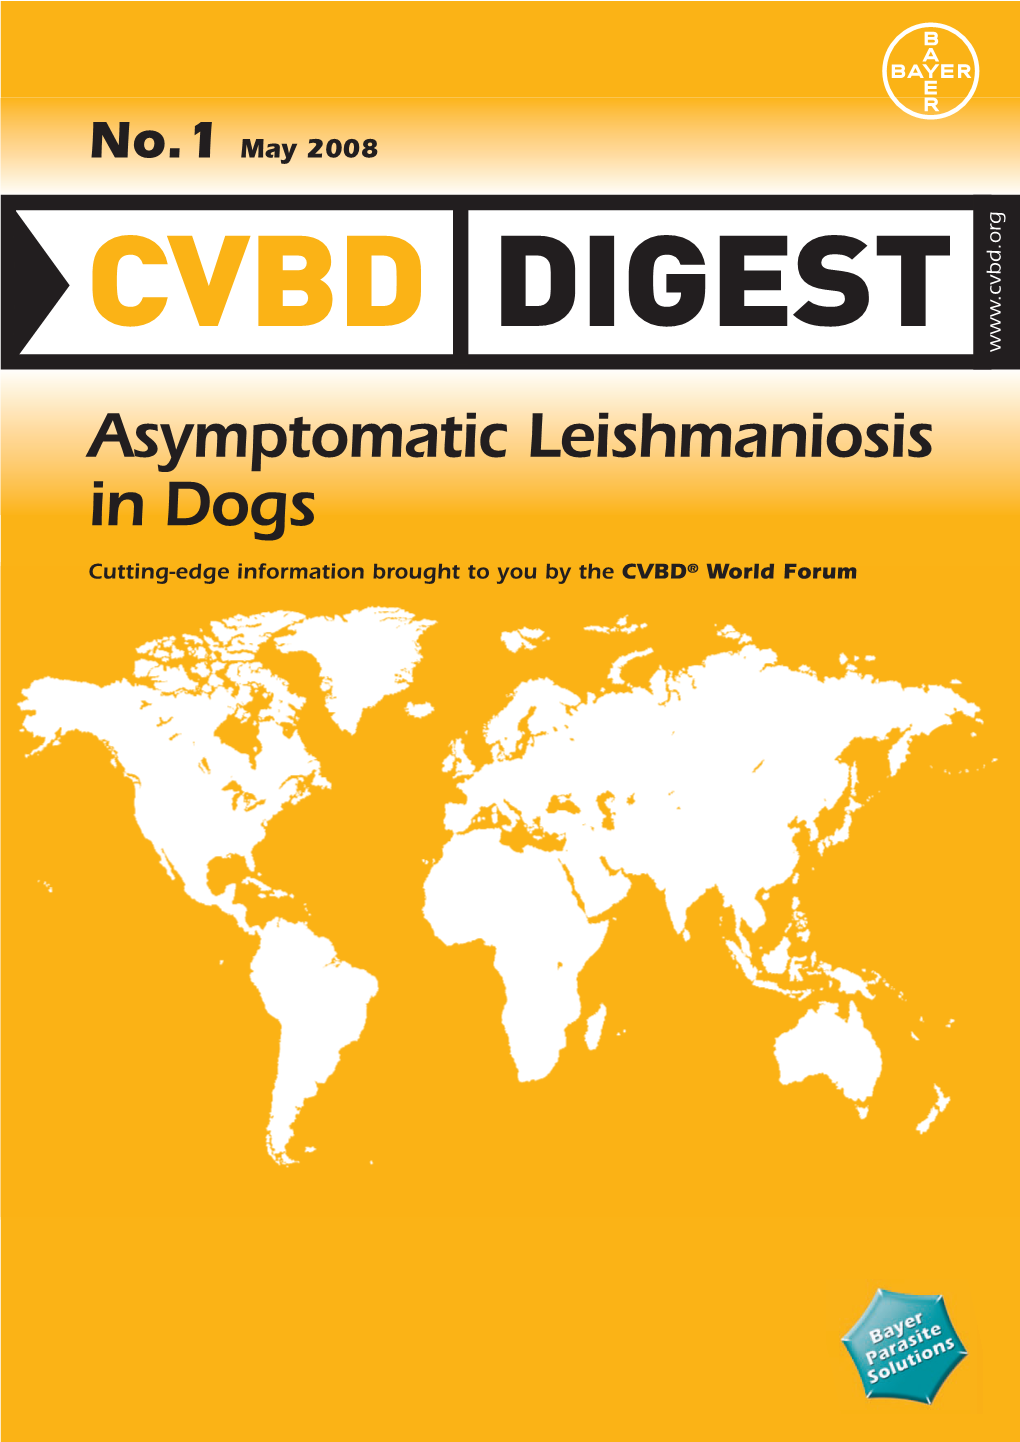 CVBD DIGEST Asymptomatic Leishmaniosis in Dogs